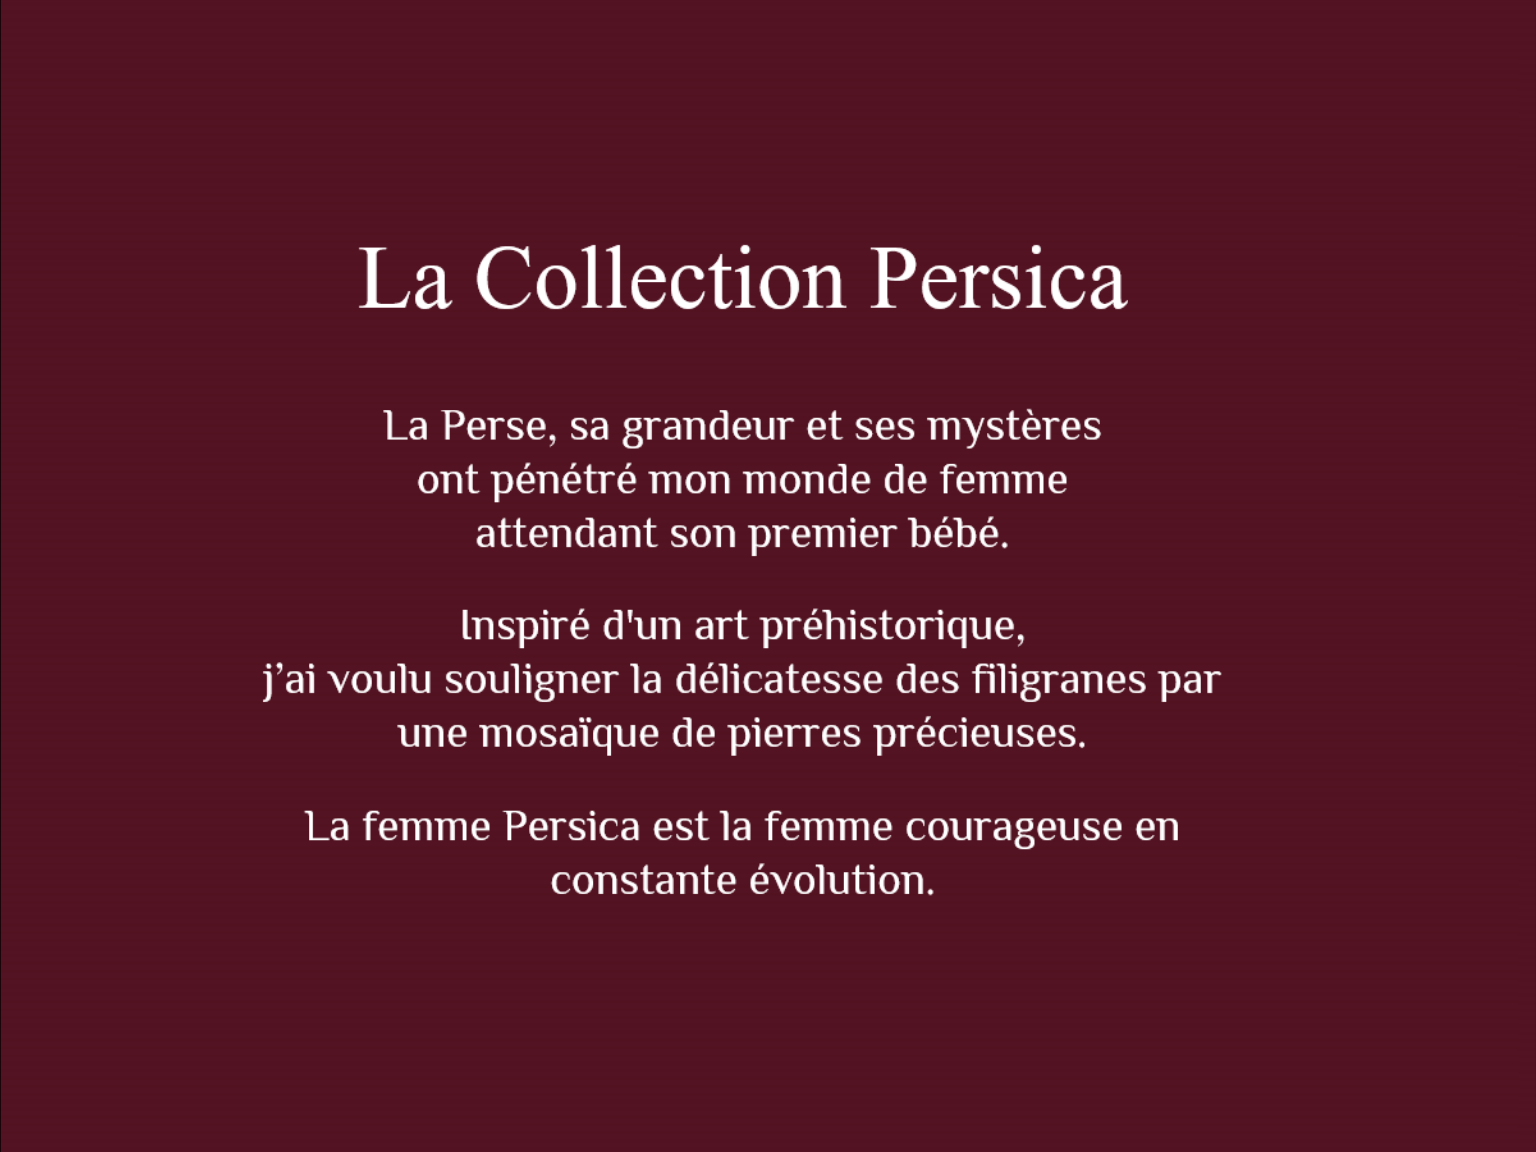 La collection persica 12